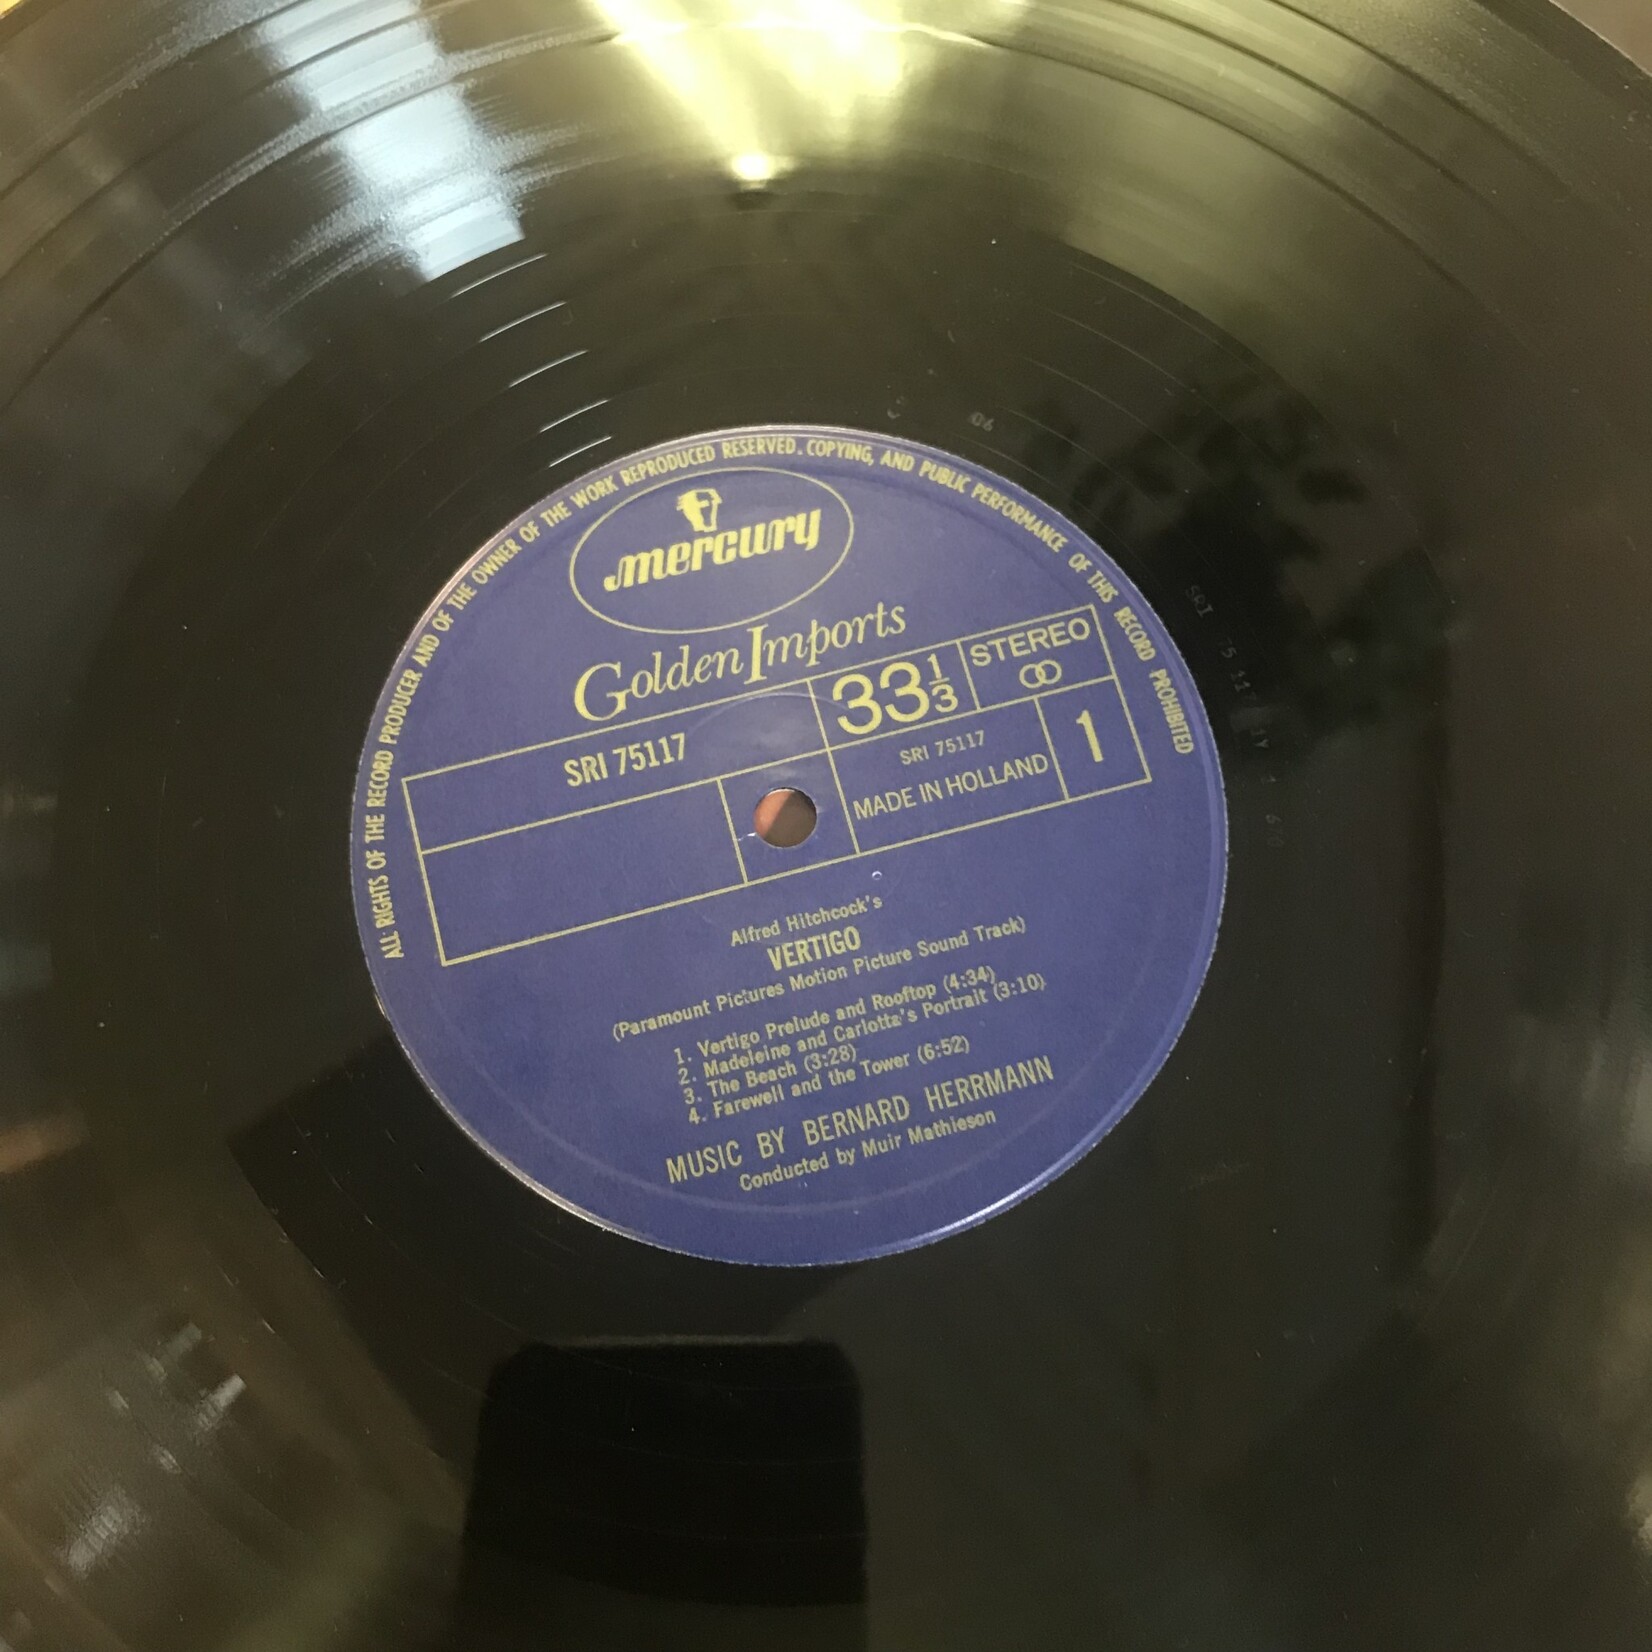 Bernard Herrmann - Music From Alfred Hitchcock’s Vertigo - SRI 75117 - Vinyl LP (USED)